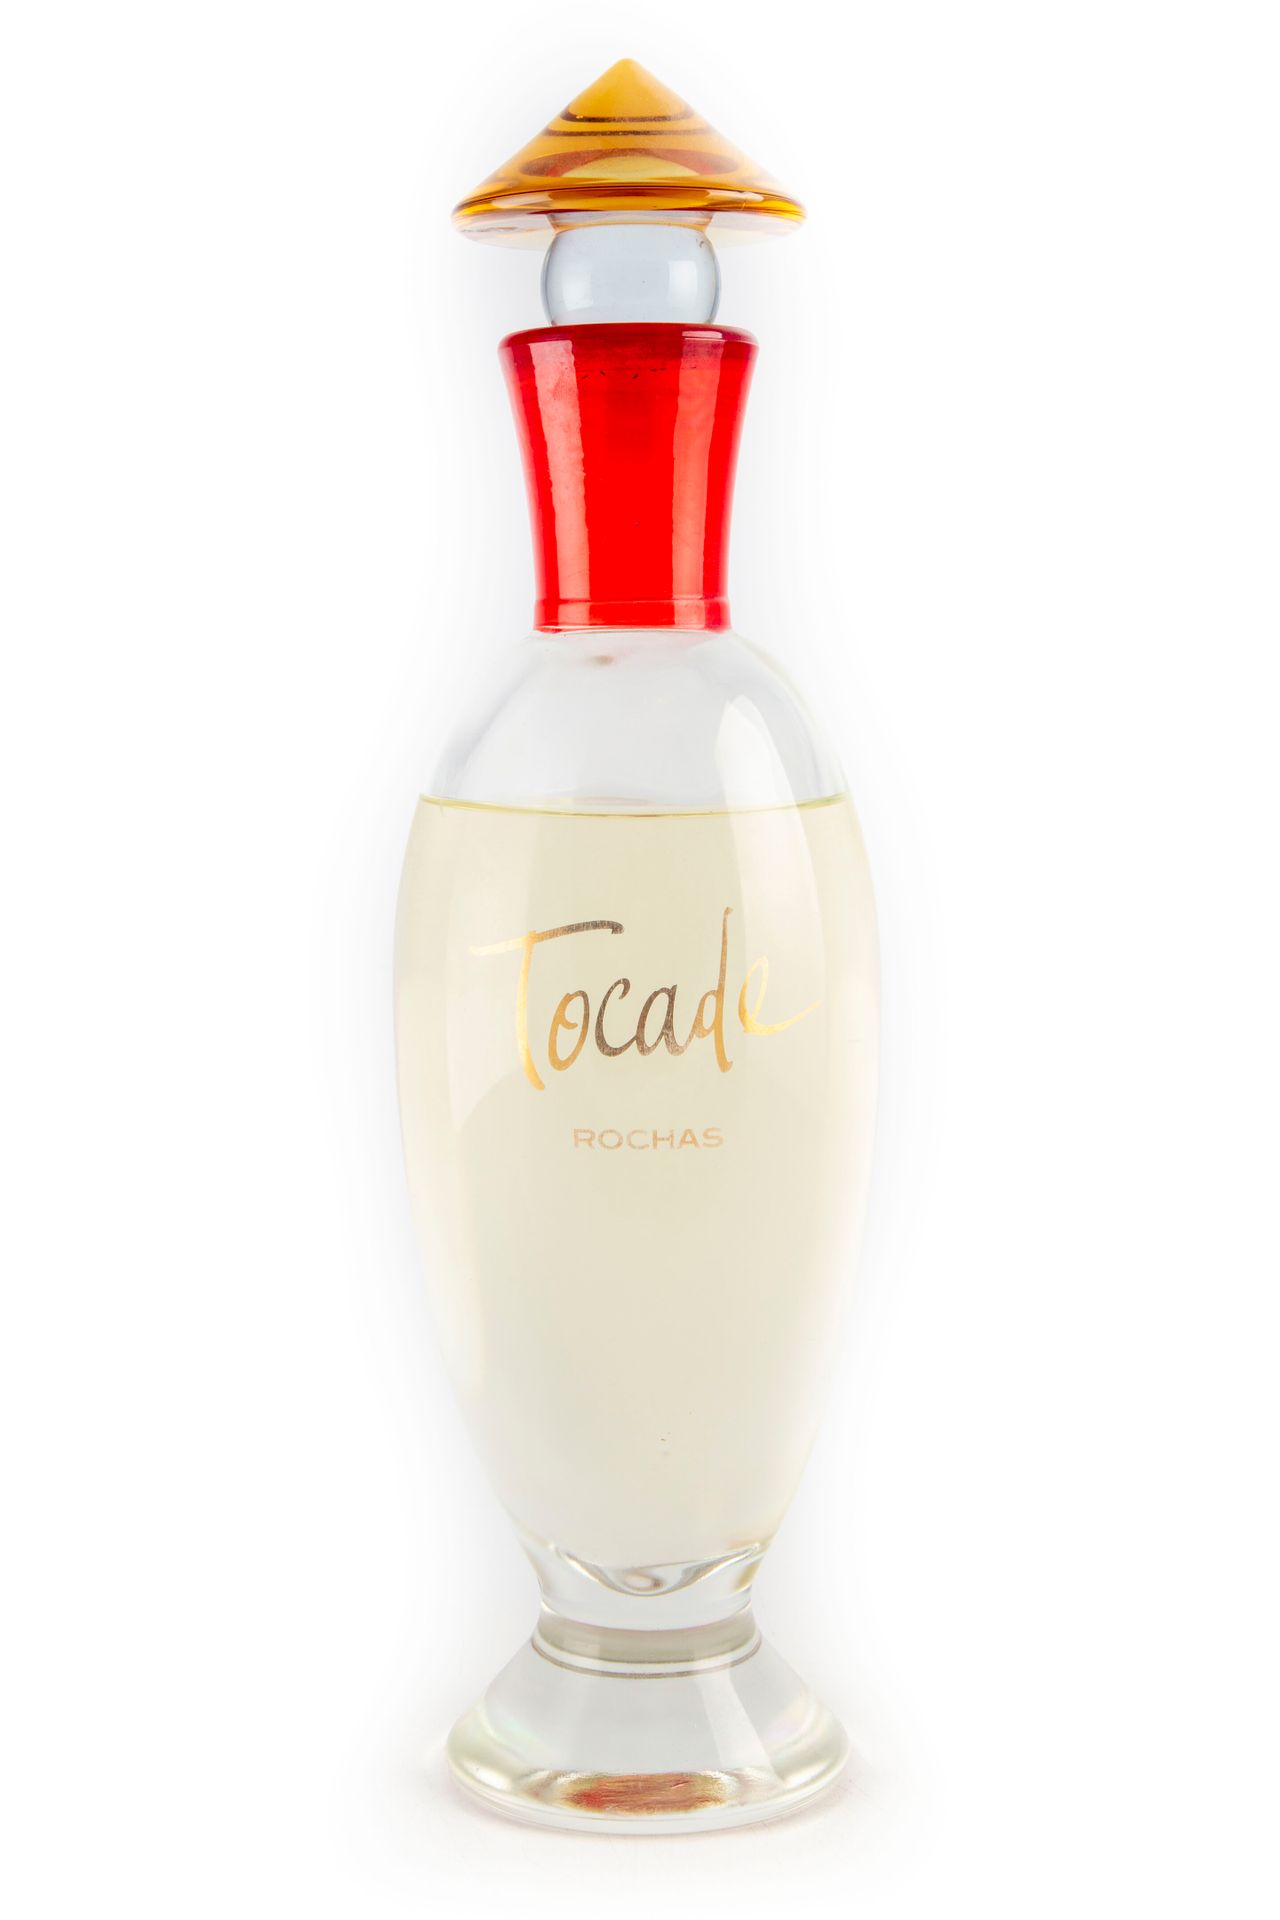 Null ROCHAS

Tocade" perfume bottle, dummy

H. 41 cm